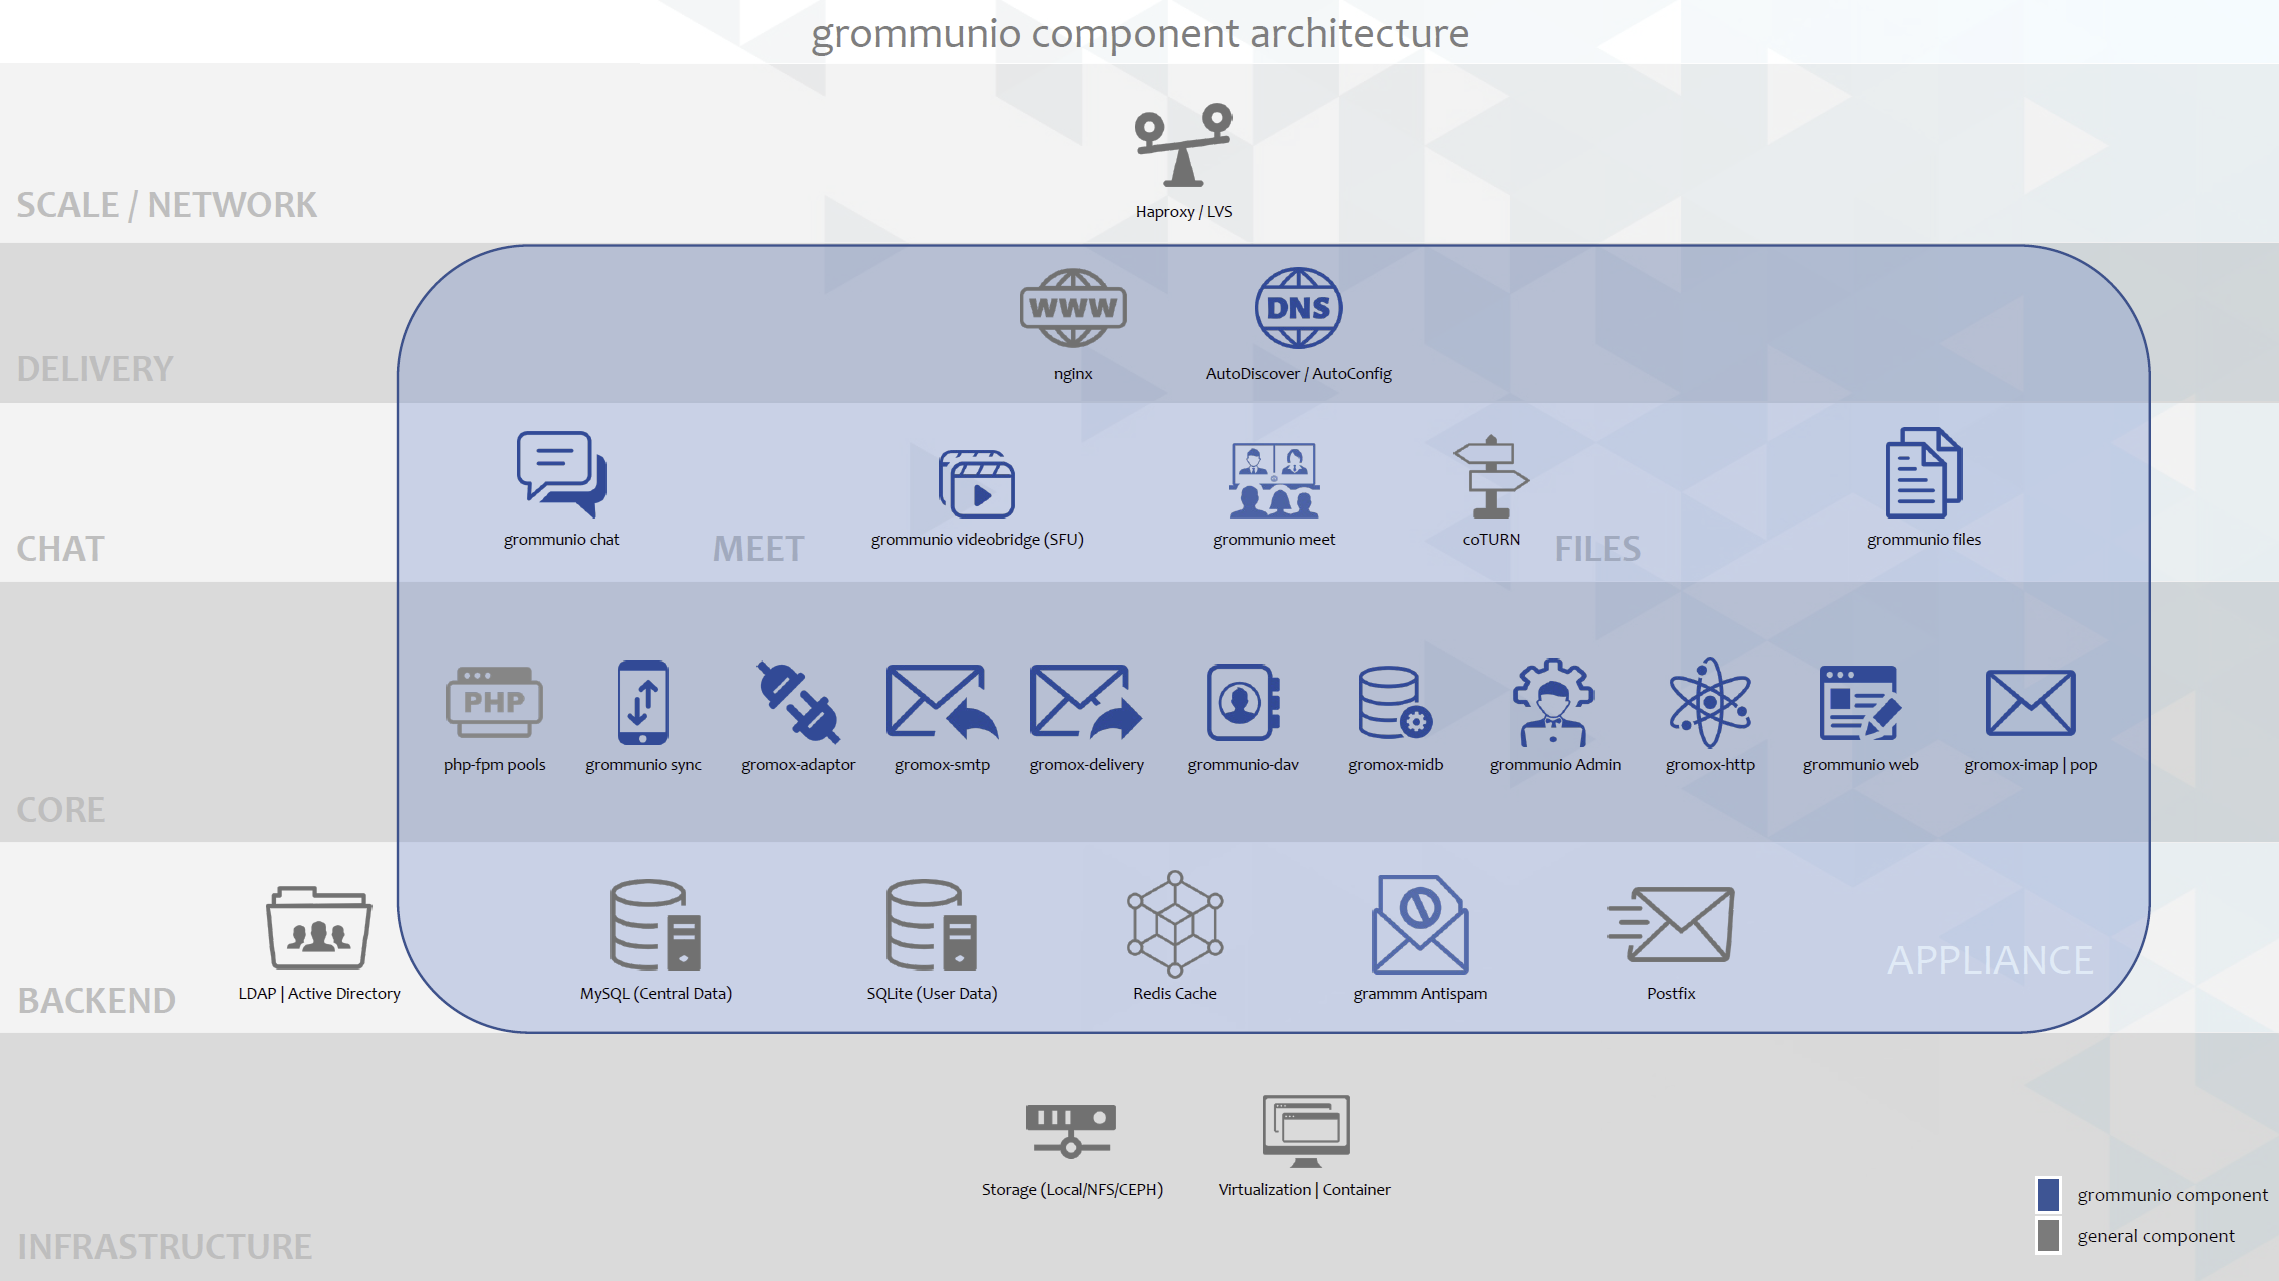 grommunio component architecture